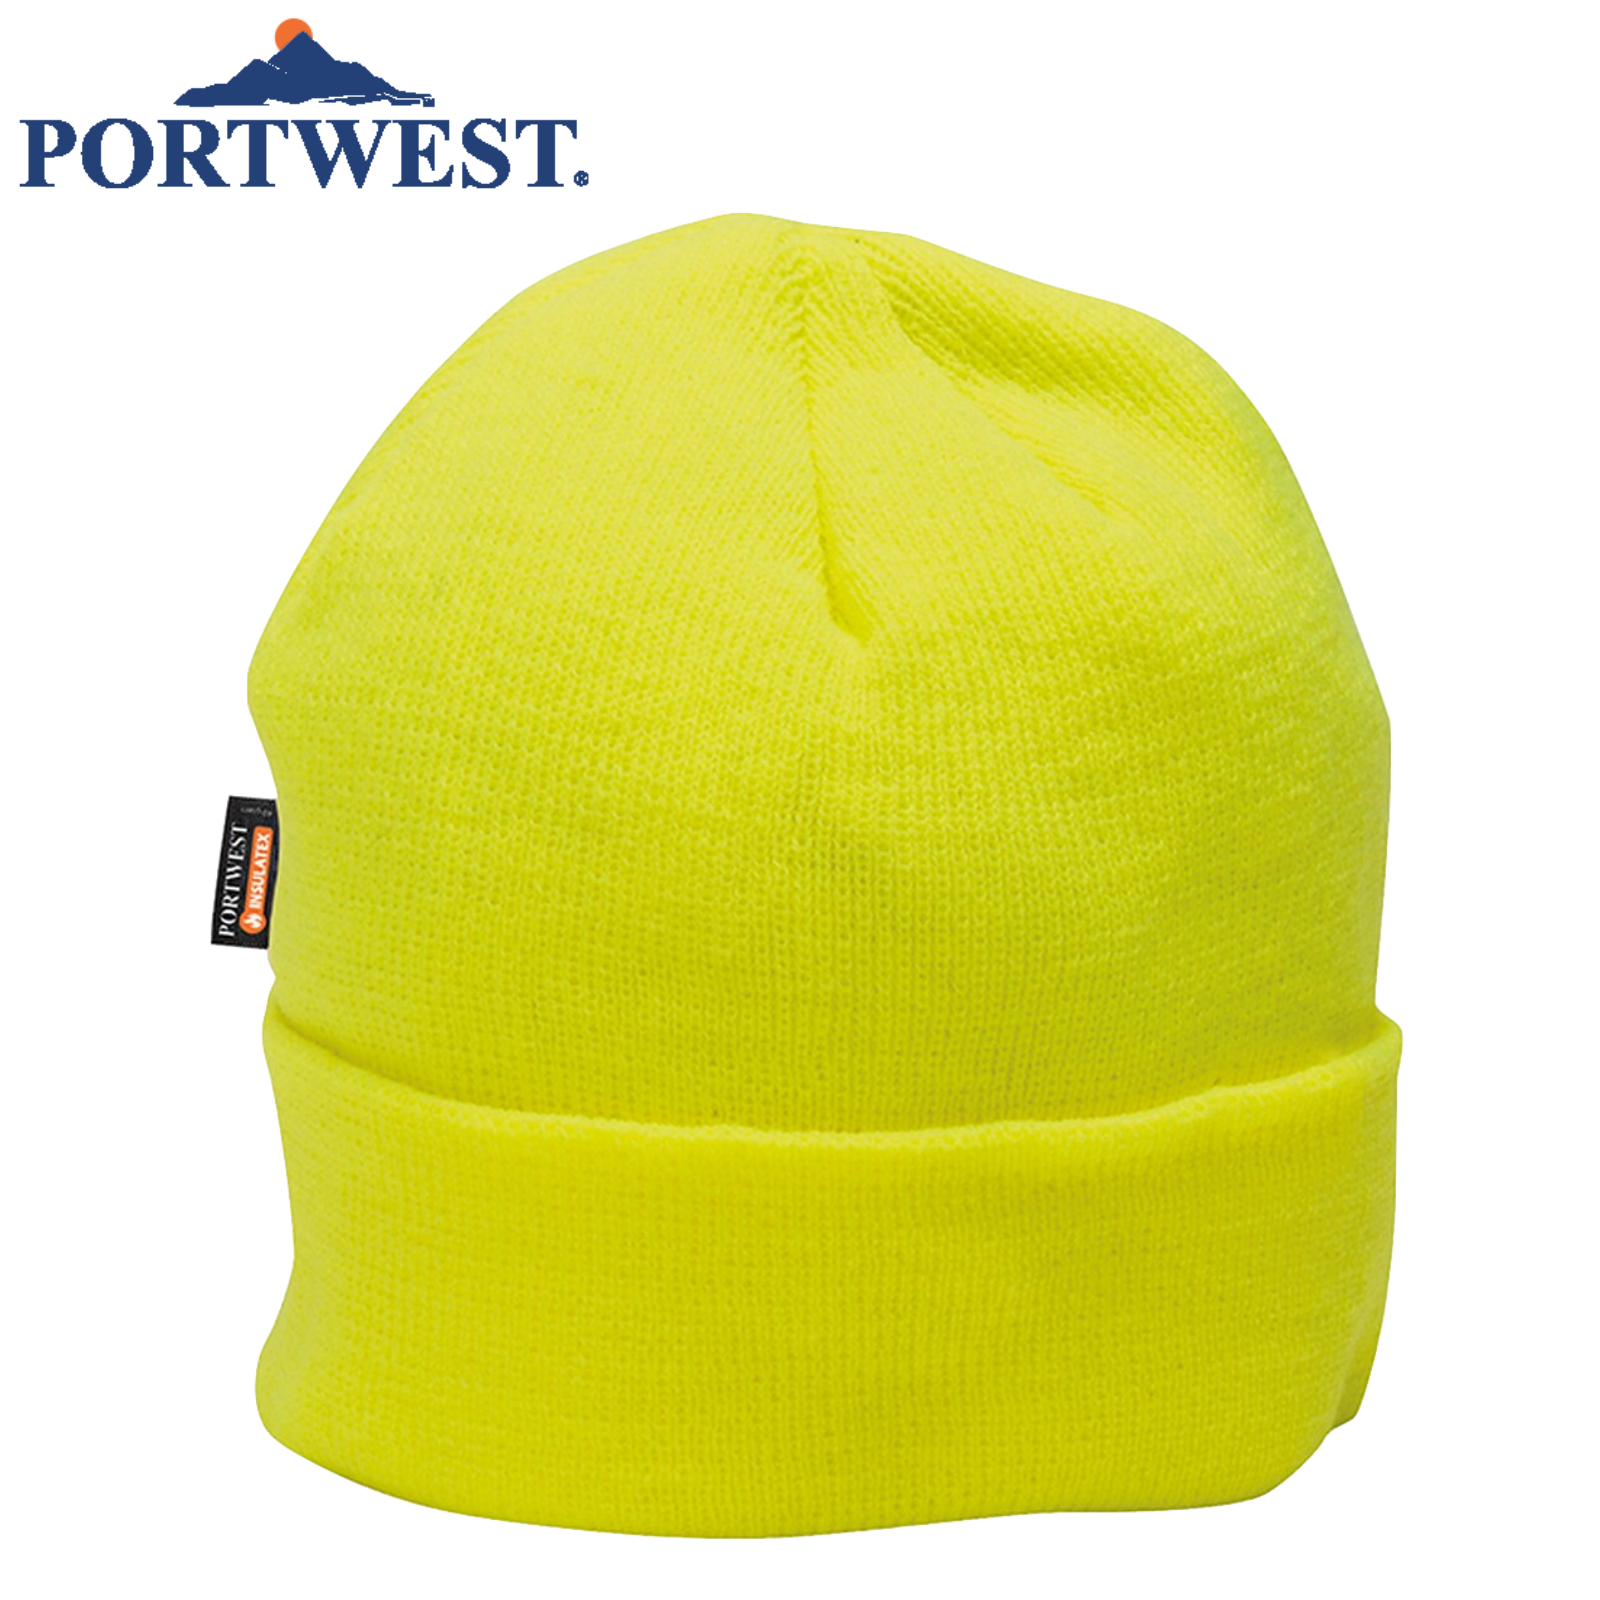 InsulaTex Hi Vis Beanie Fleece Thermal Insulated Workwear Hat - Yellow